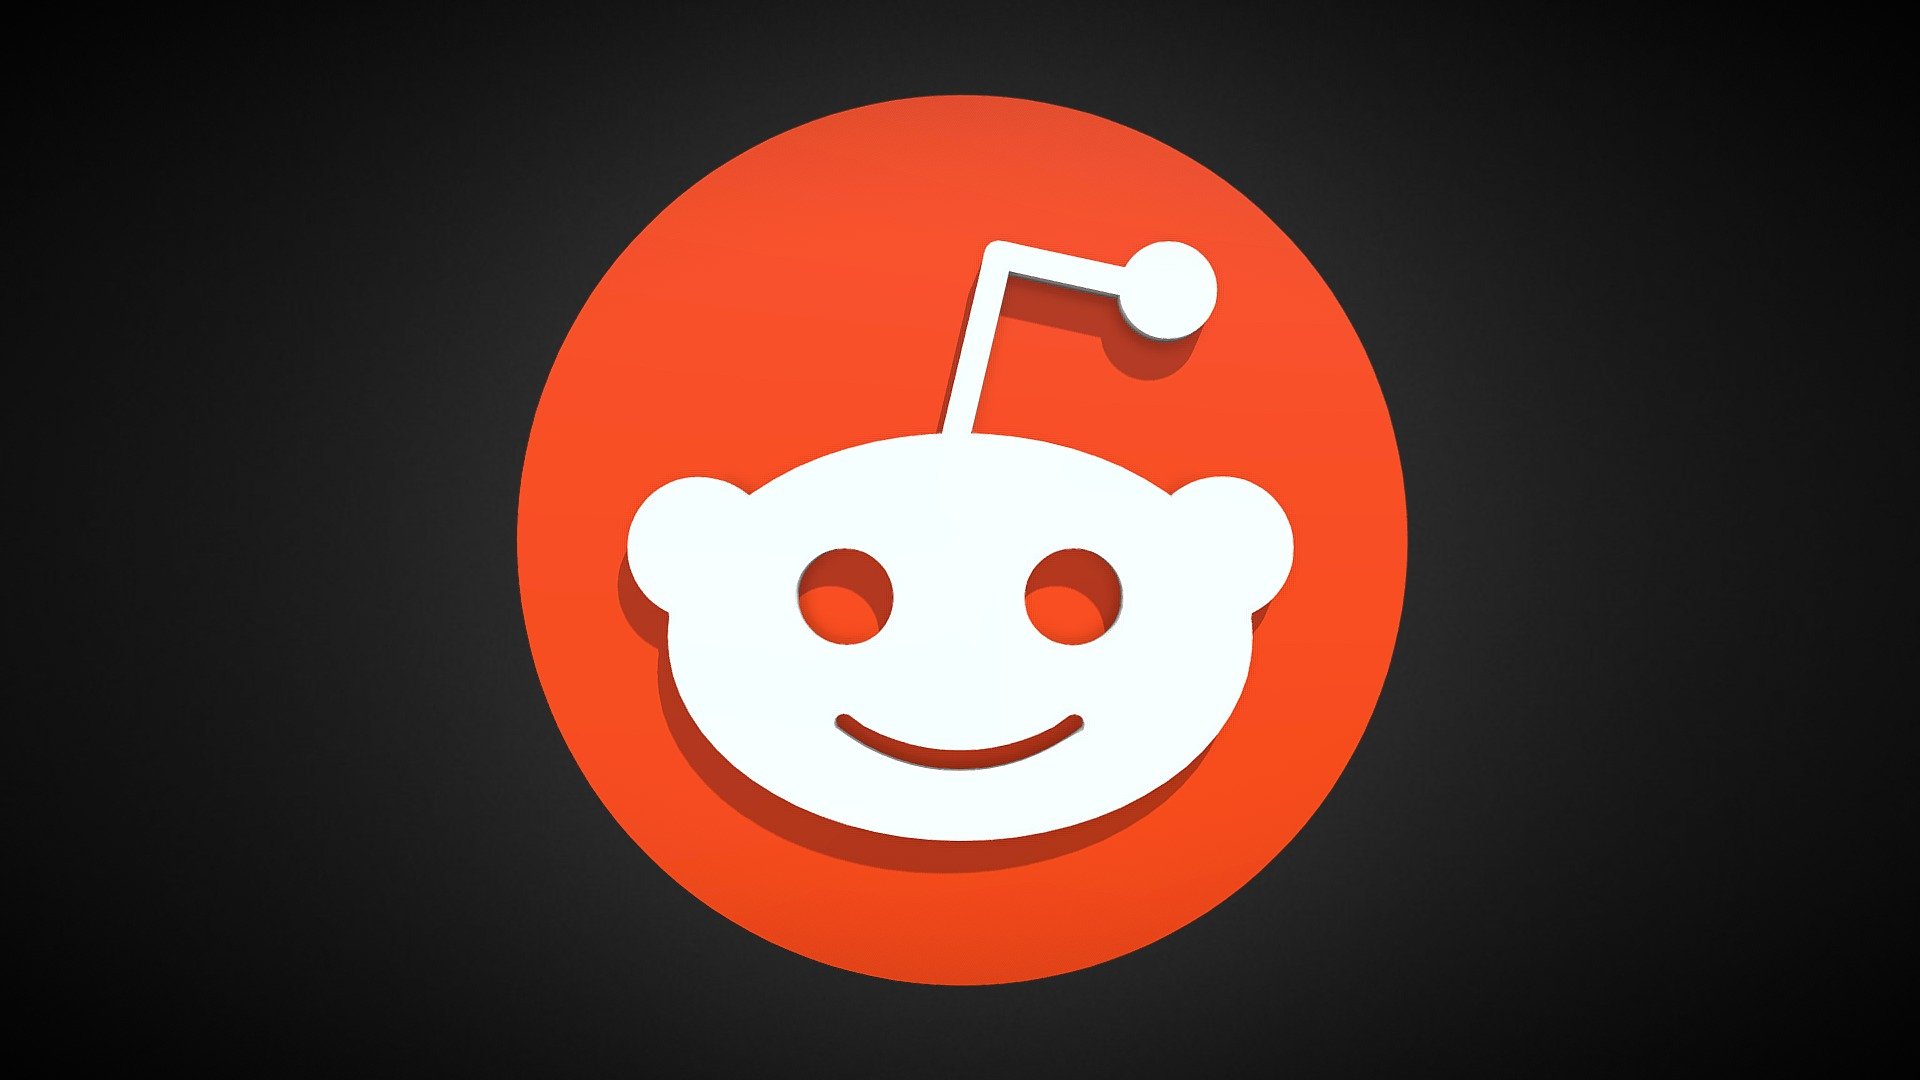 Reddit Abstract Logo Wallpapers